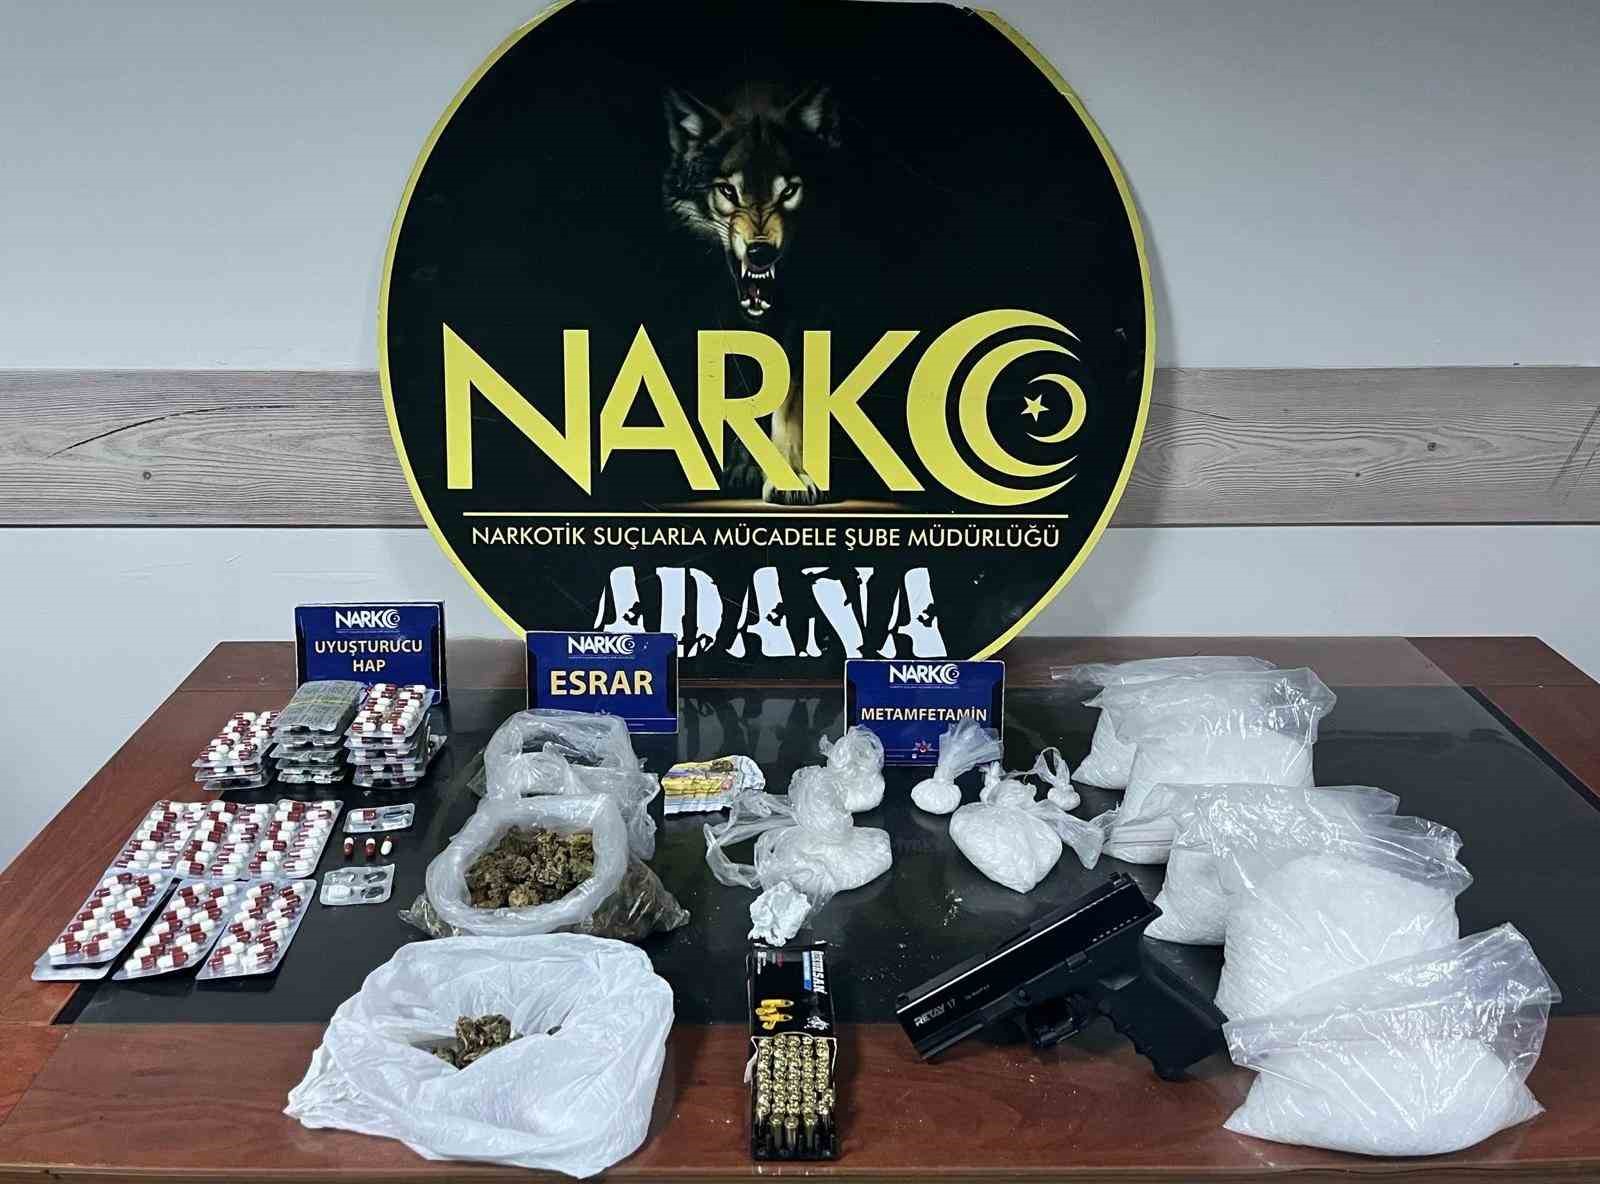 Adana’da 4 kilo metamfetamin ele geçirildi: 4 kişi tutuklandı